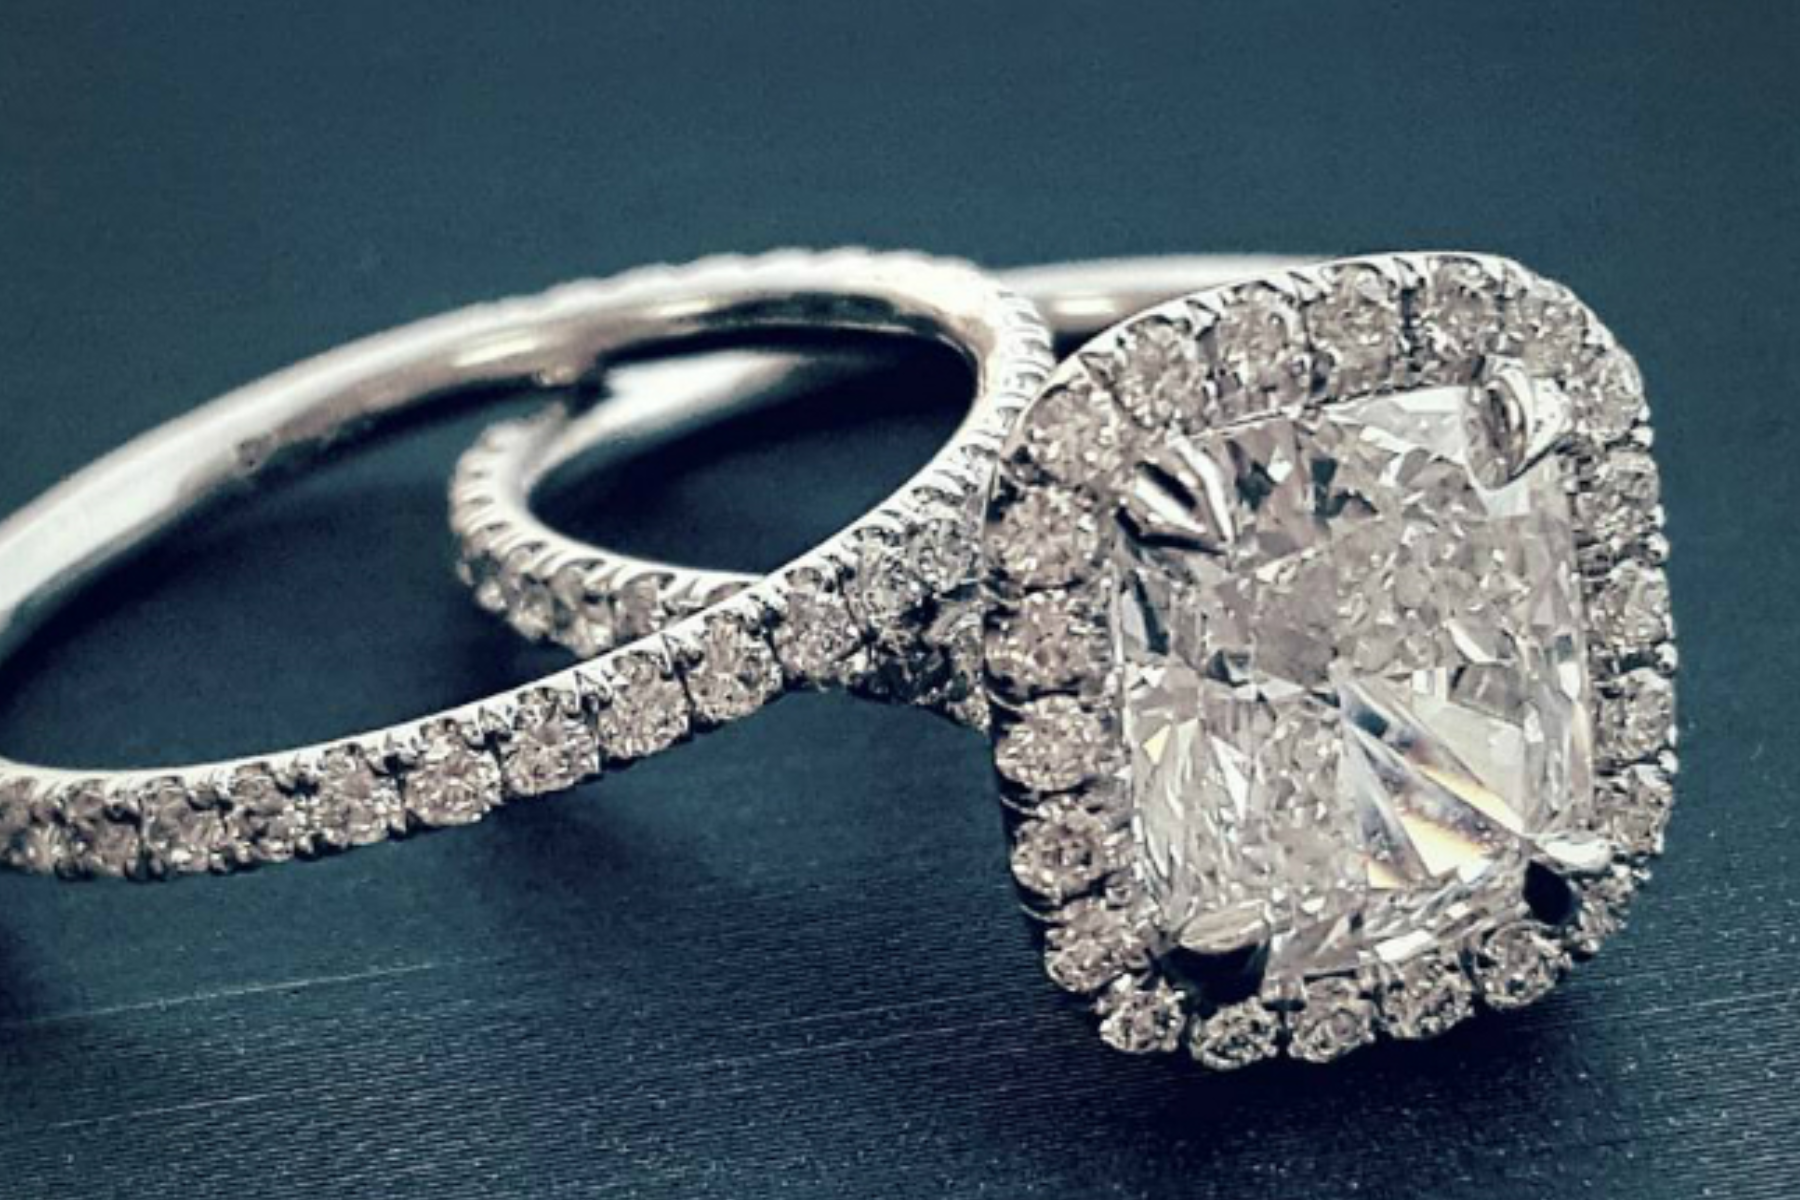 A cushion-cut diamond engagement ring resting on a plain diamond ring